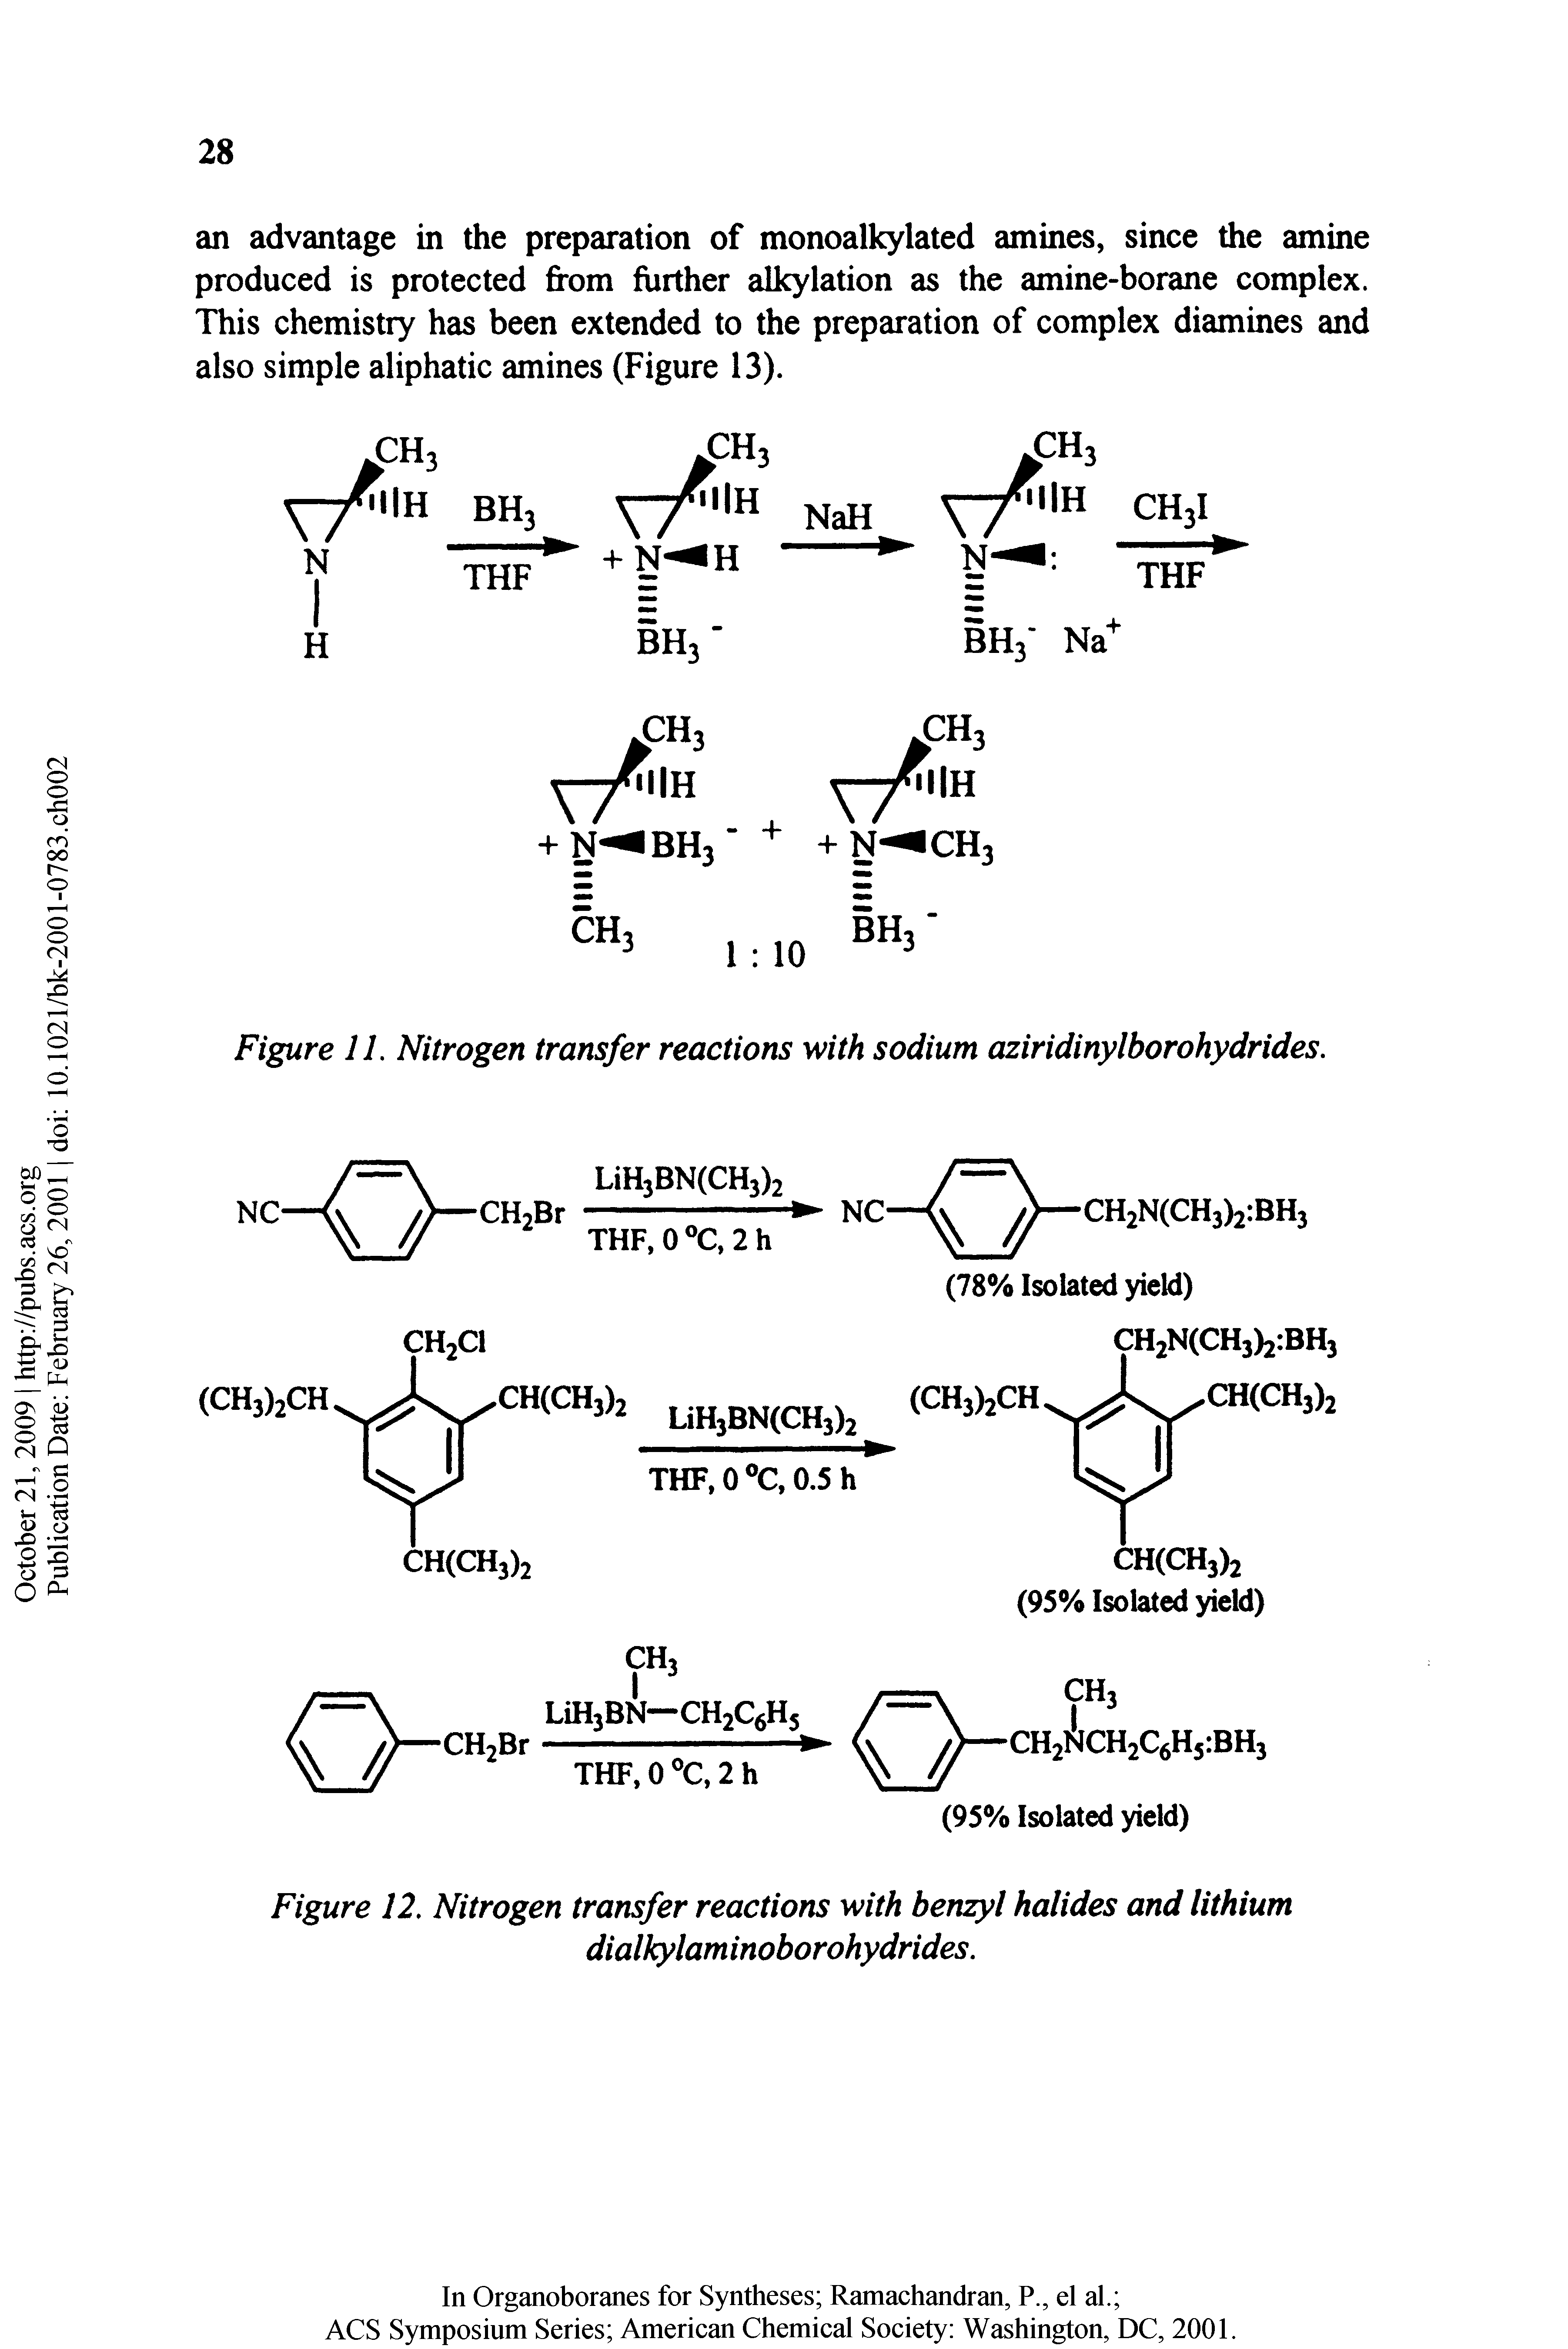 Figure 11. Nitrogen transfer reactions with sodium aziridinylborohydrides.